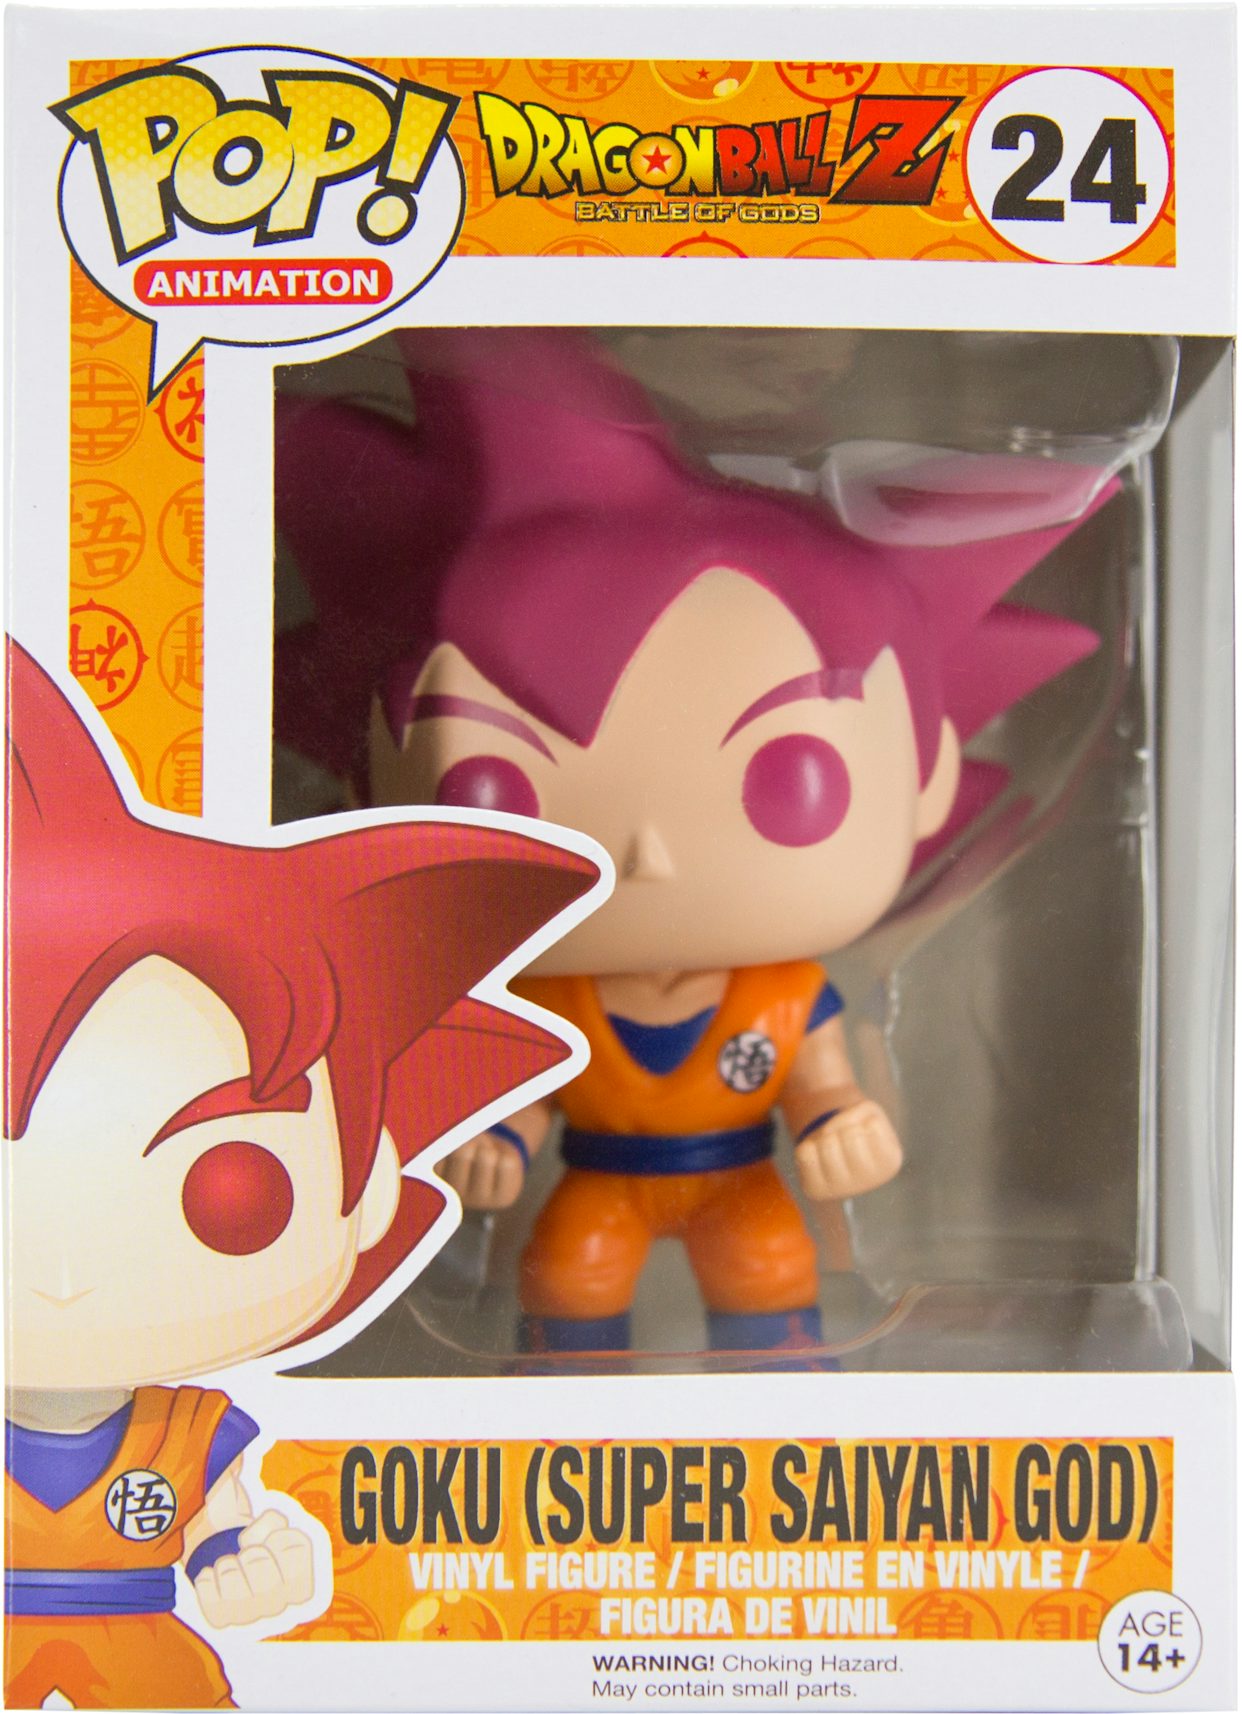 Funko Pop! Animation DragonBall Z Goku (Super Saiyan God) Figure